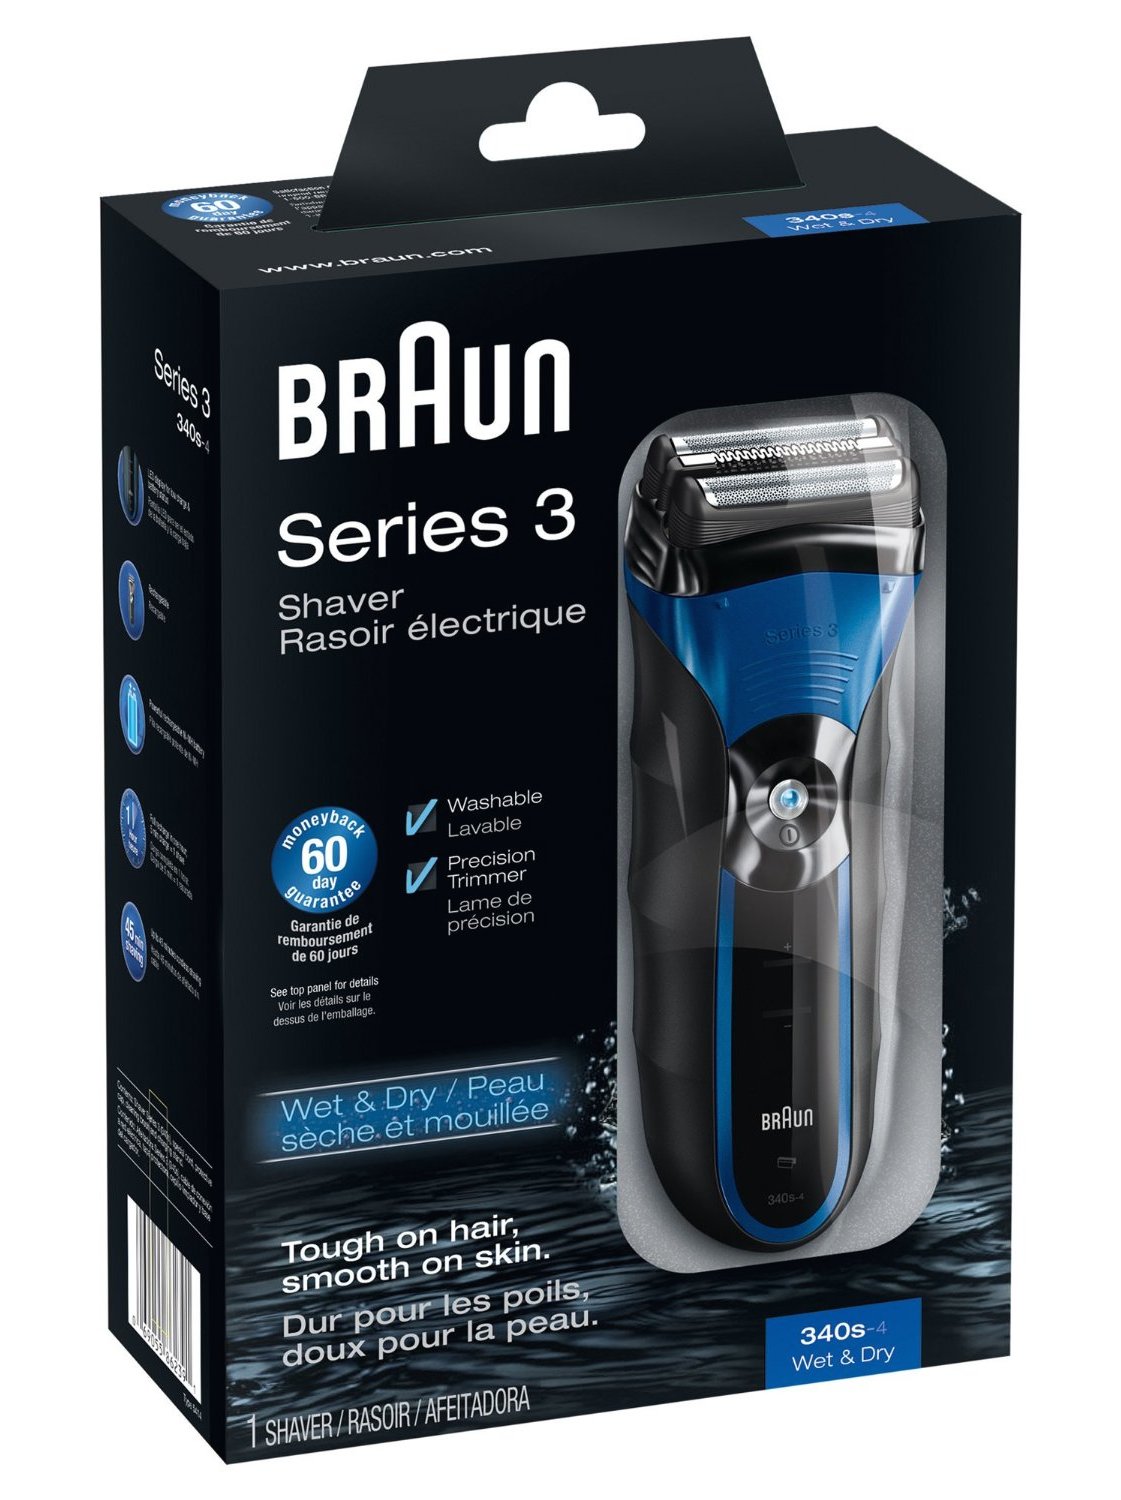 Home: Braun Series 3 Wet/Dry Shaver $50 (orig. $80